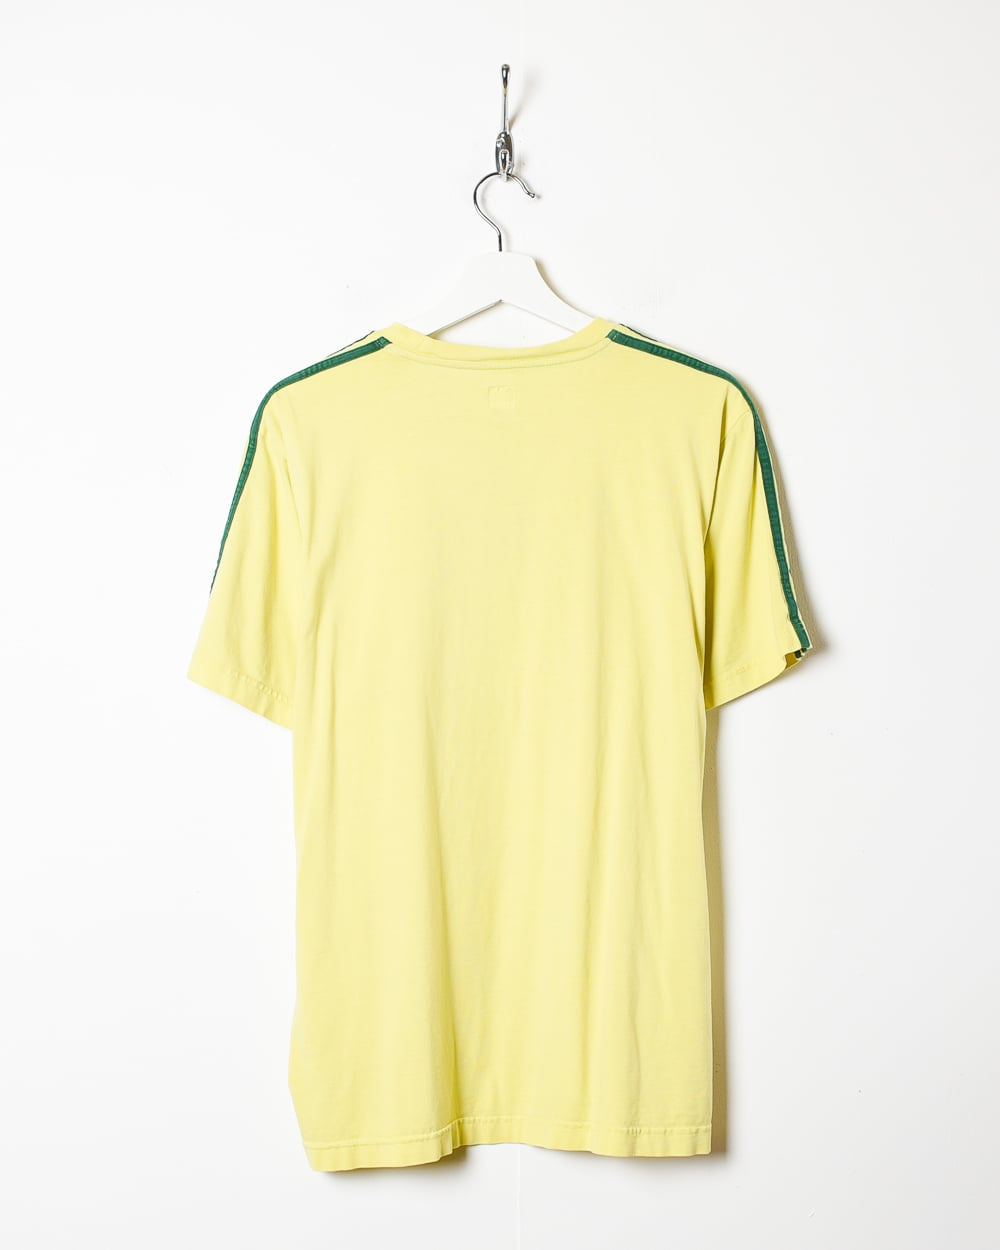 Yellow Adidas T-Shirt - Large